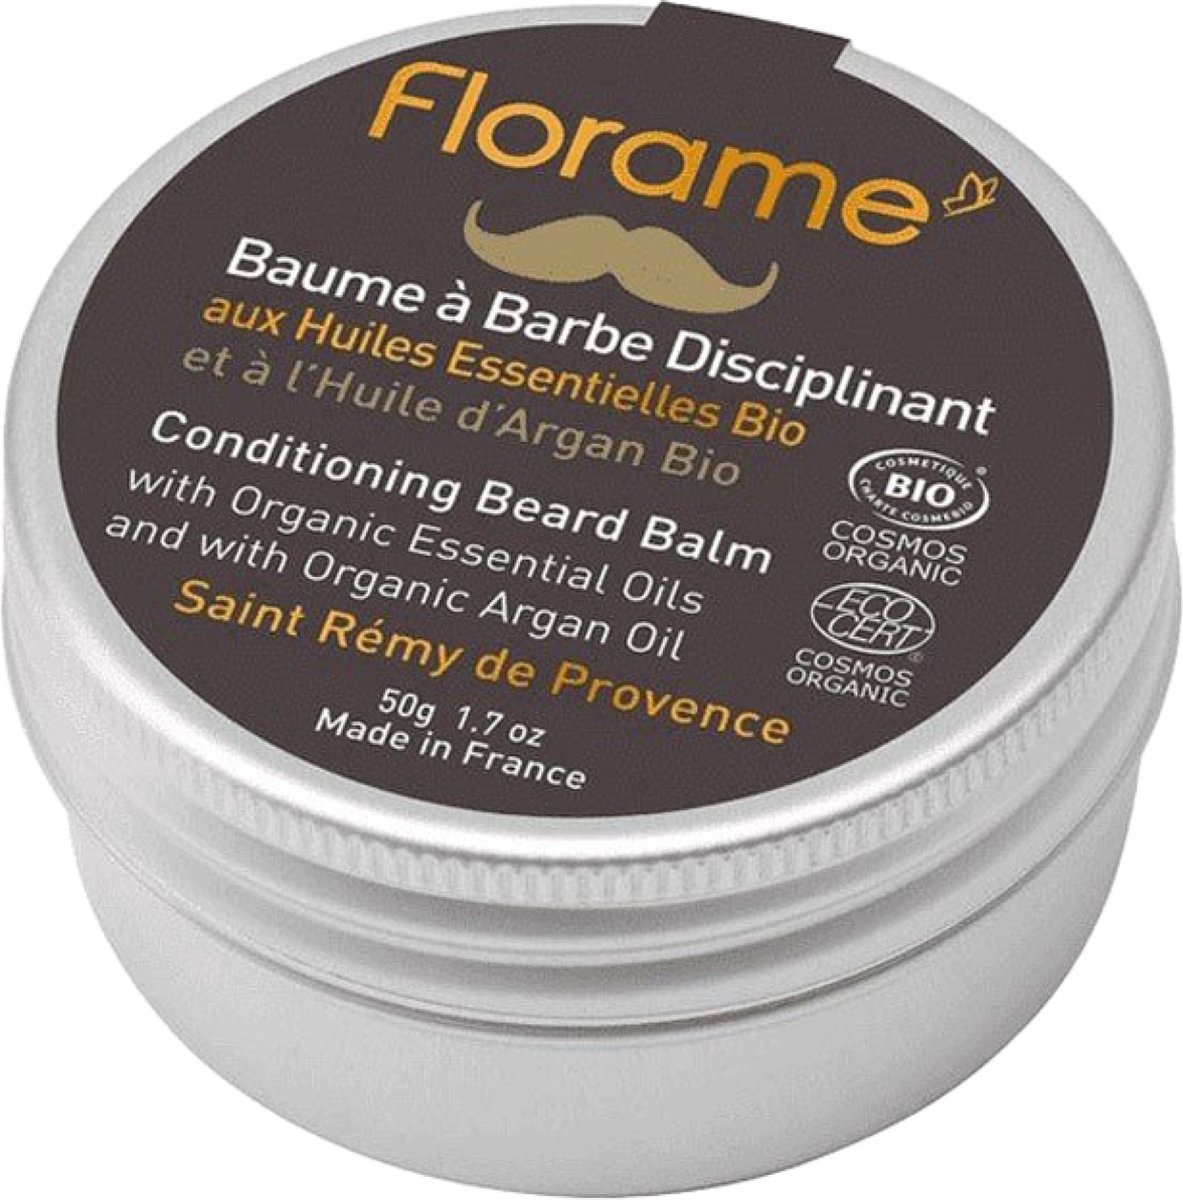 Florame Organic Disciplining Baardbalsem 50 g